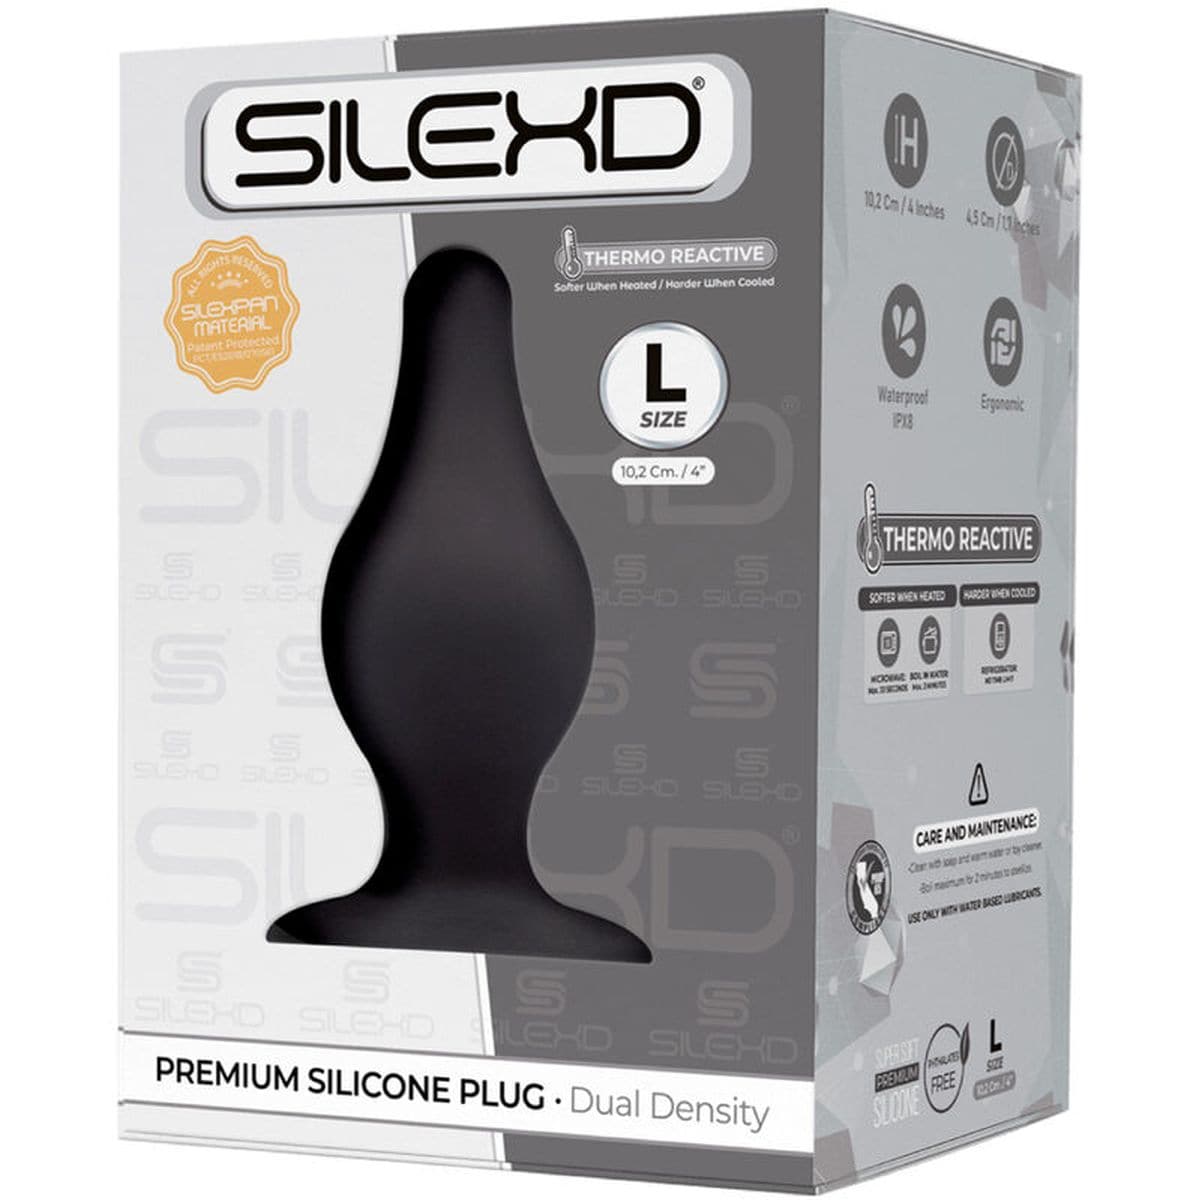 Plug Anal Silexd 2 Premium Silicone L, 10.2cm Ø4.5cm